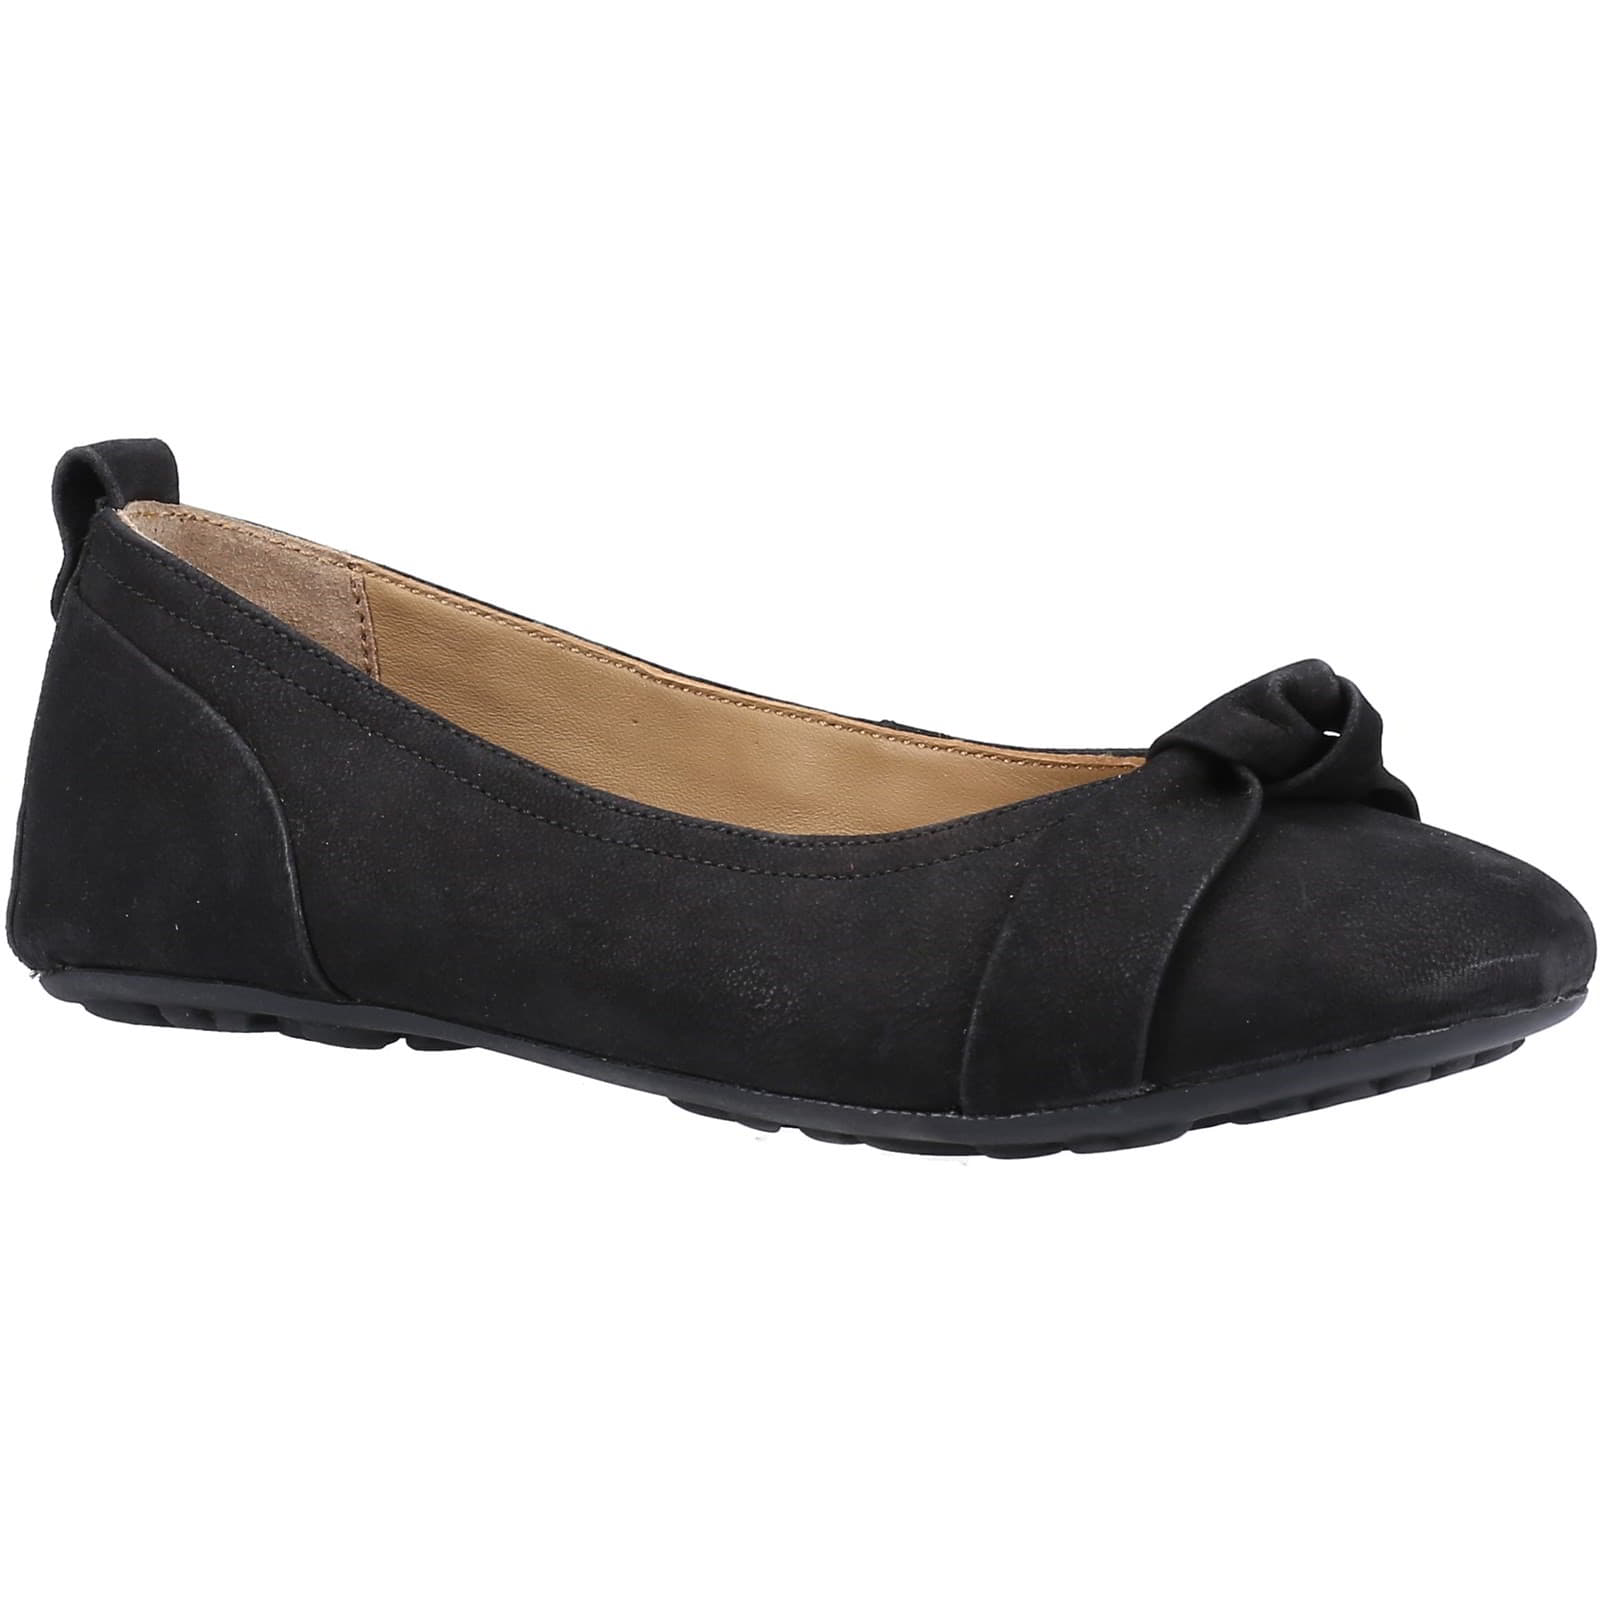 Hush Puppies Women's Jada Slip On Leather Ballerina Pumps Flats Shoes - UK 7